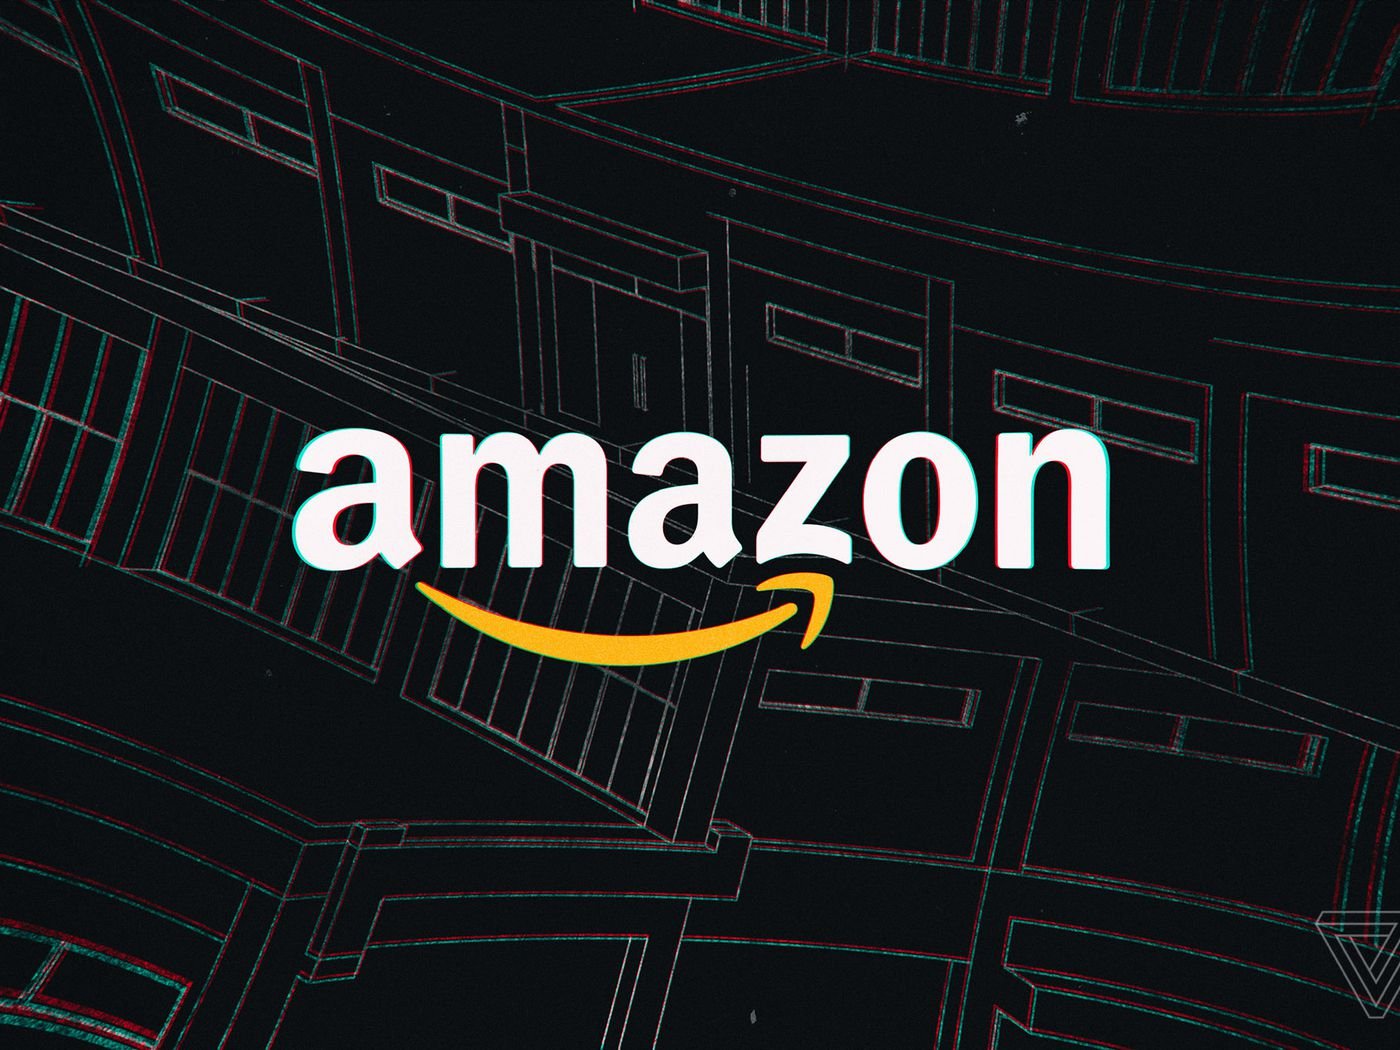 Amazon e commerce company all about amazon…0